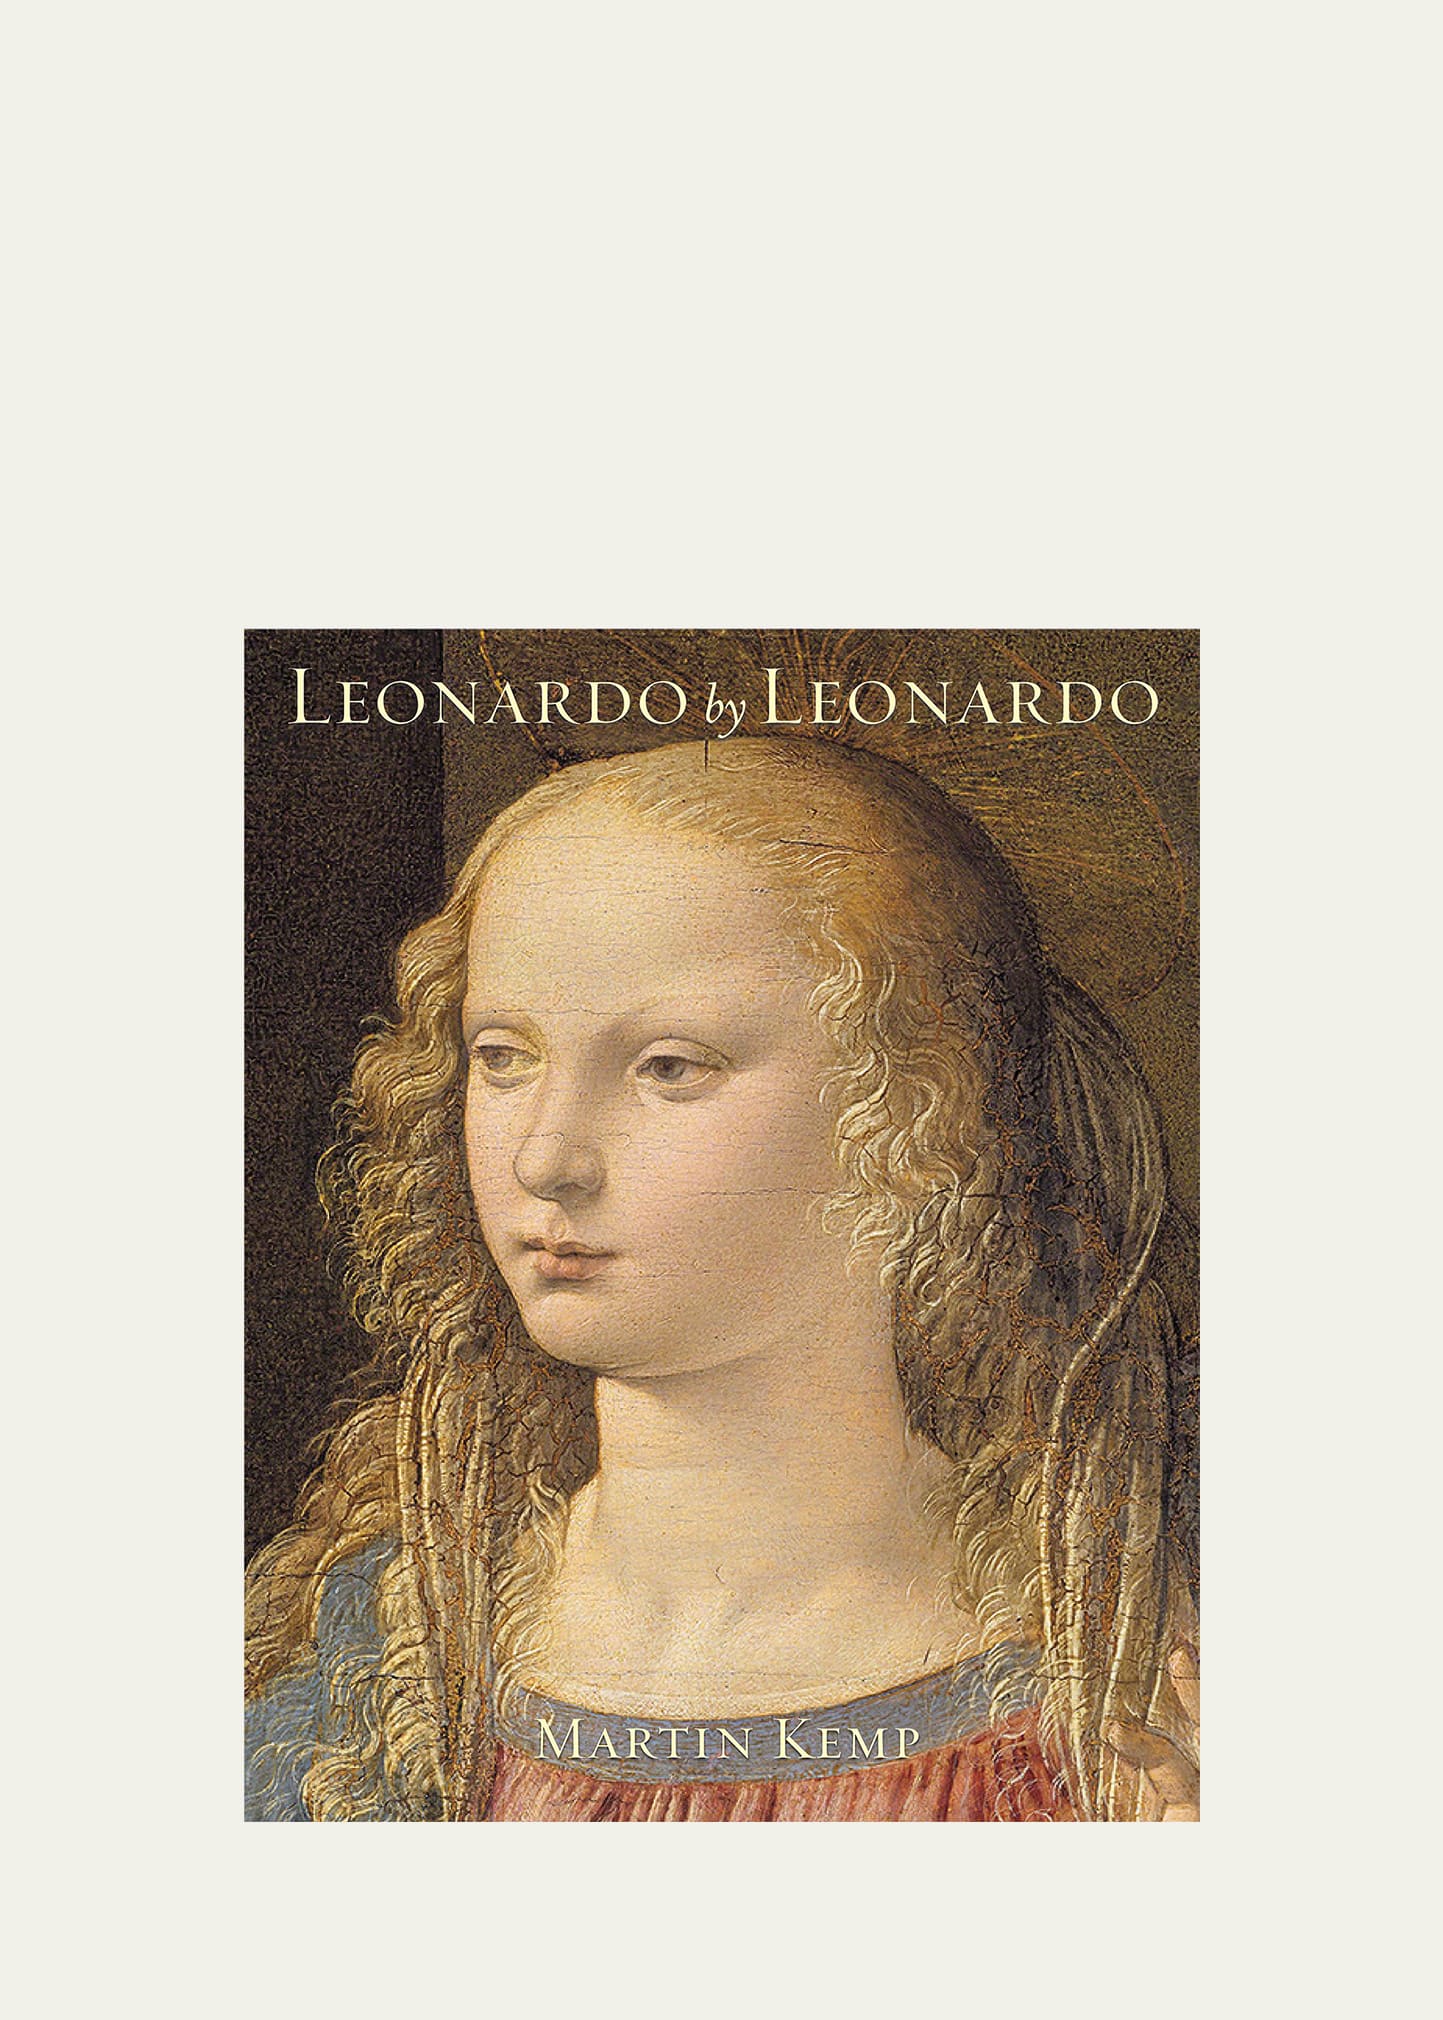 Leonardo by Leonardo by Martin J. Kemp